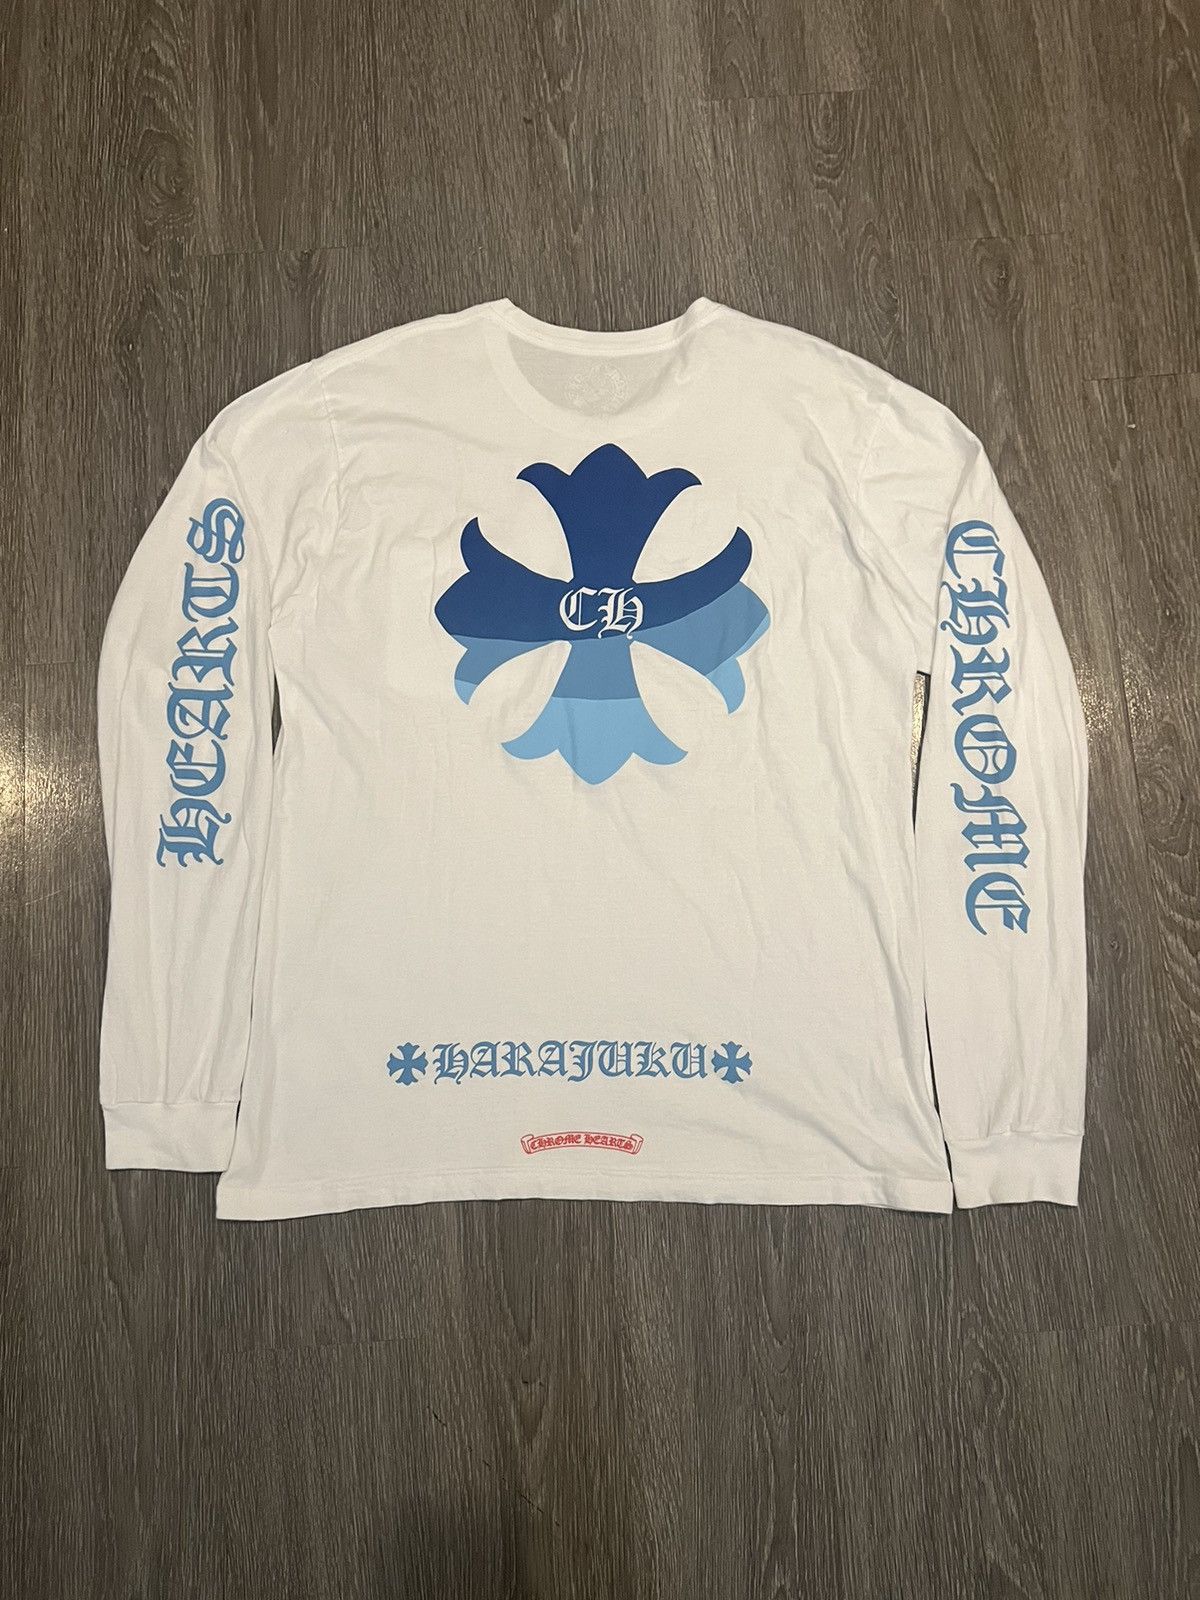 chrome hearts T-shirt XLサイズ - トップス